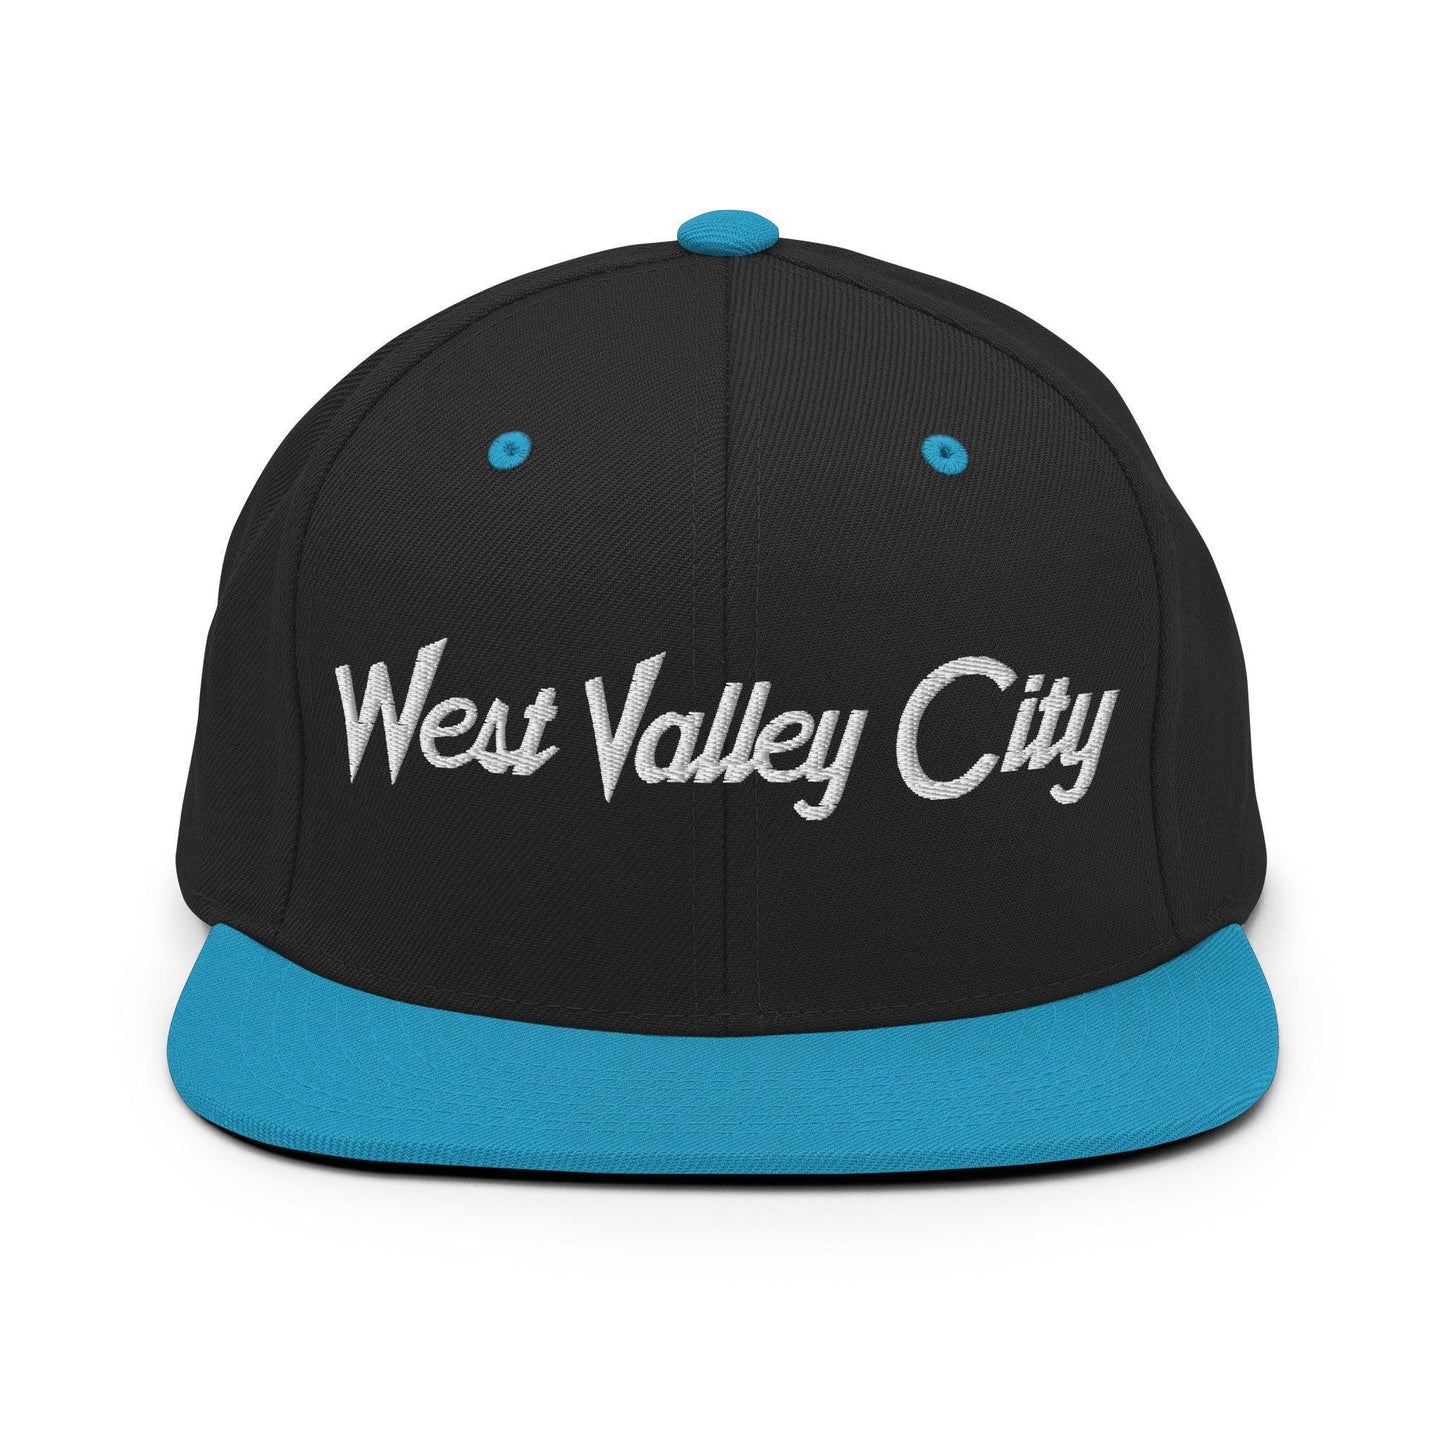 West Valley City Script Snapback Hat Black Teal